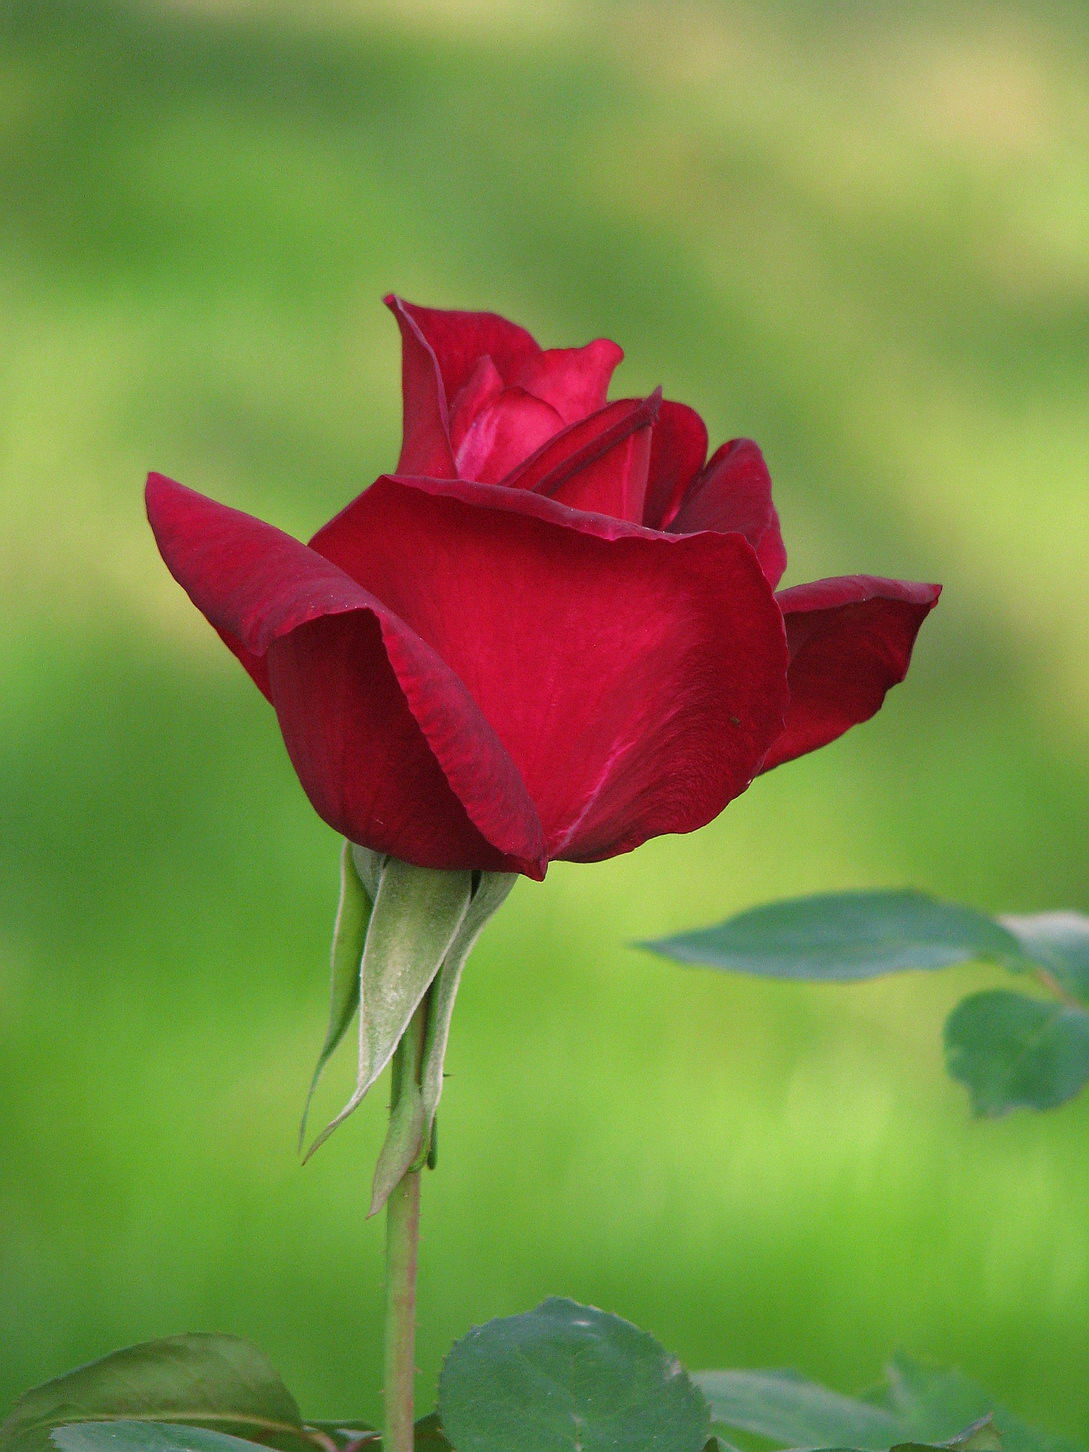 Темно-красная роза